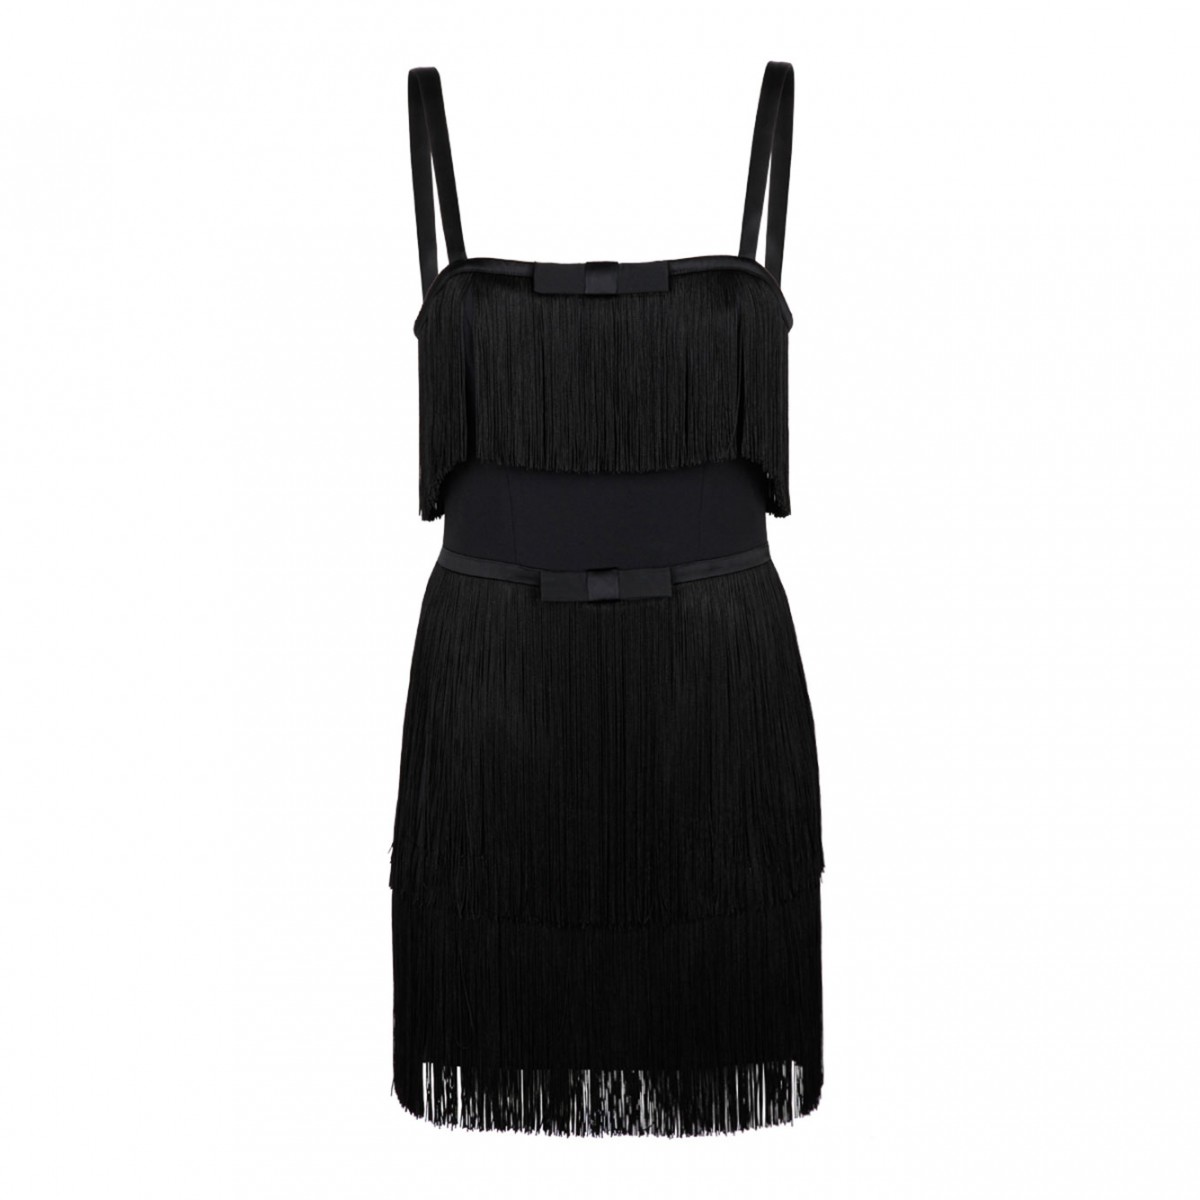 Black Mini Dress With Fringes